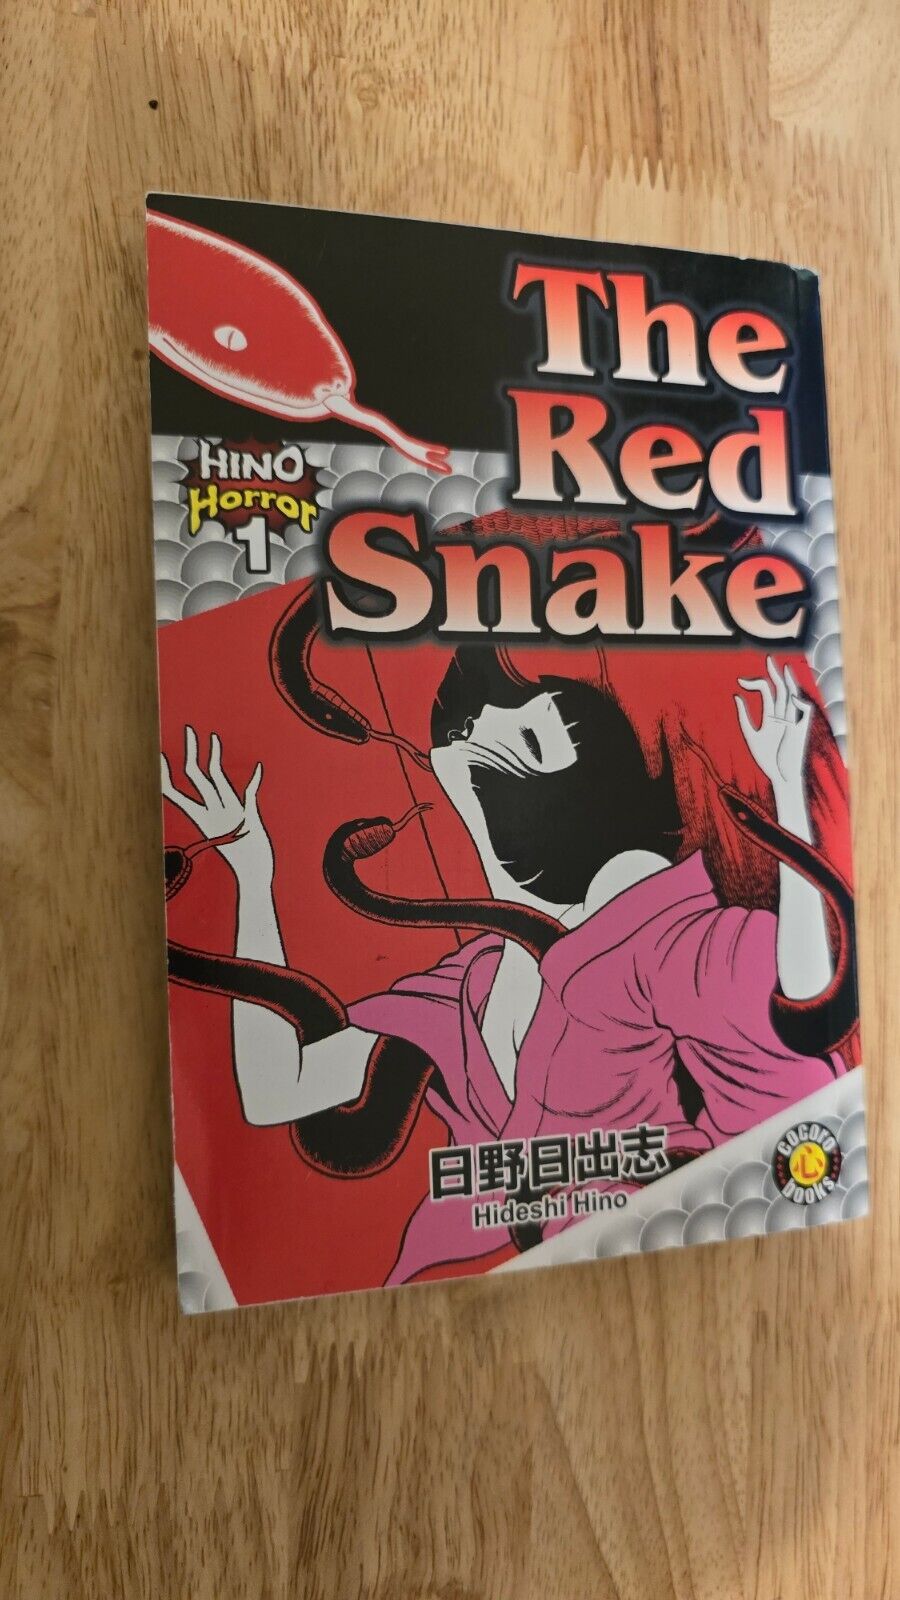 Hino Horror, Vol. 1: The Red Snake, Hideshi Hino, English Manga 2004 Paperback